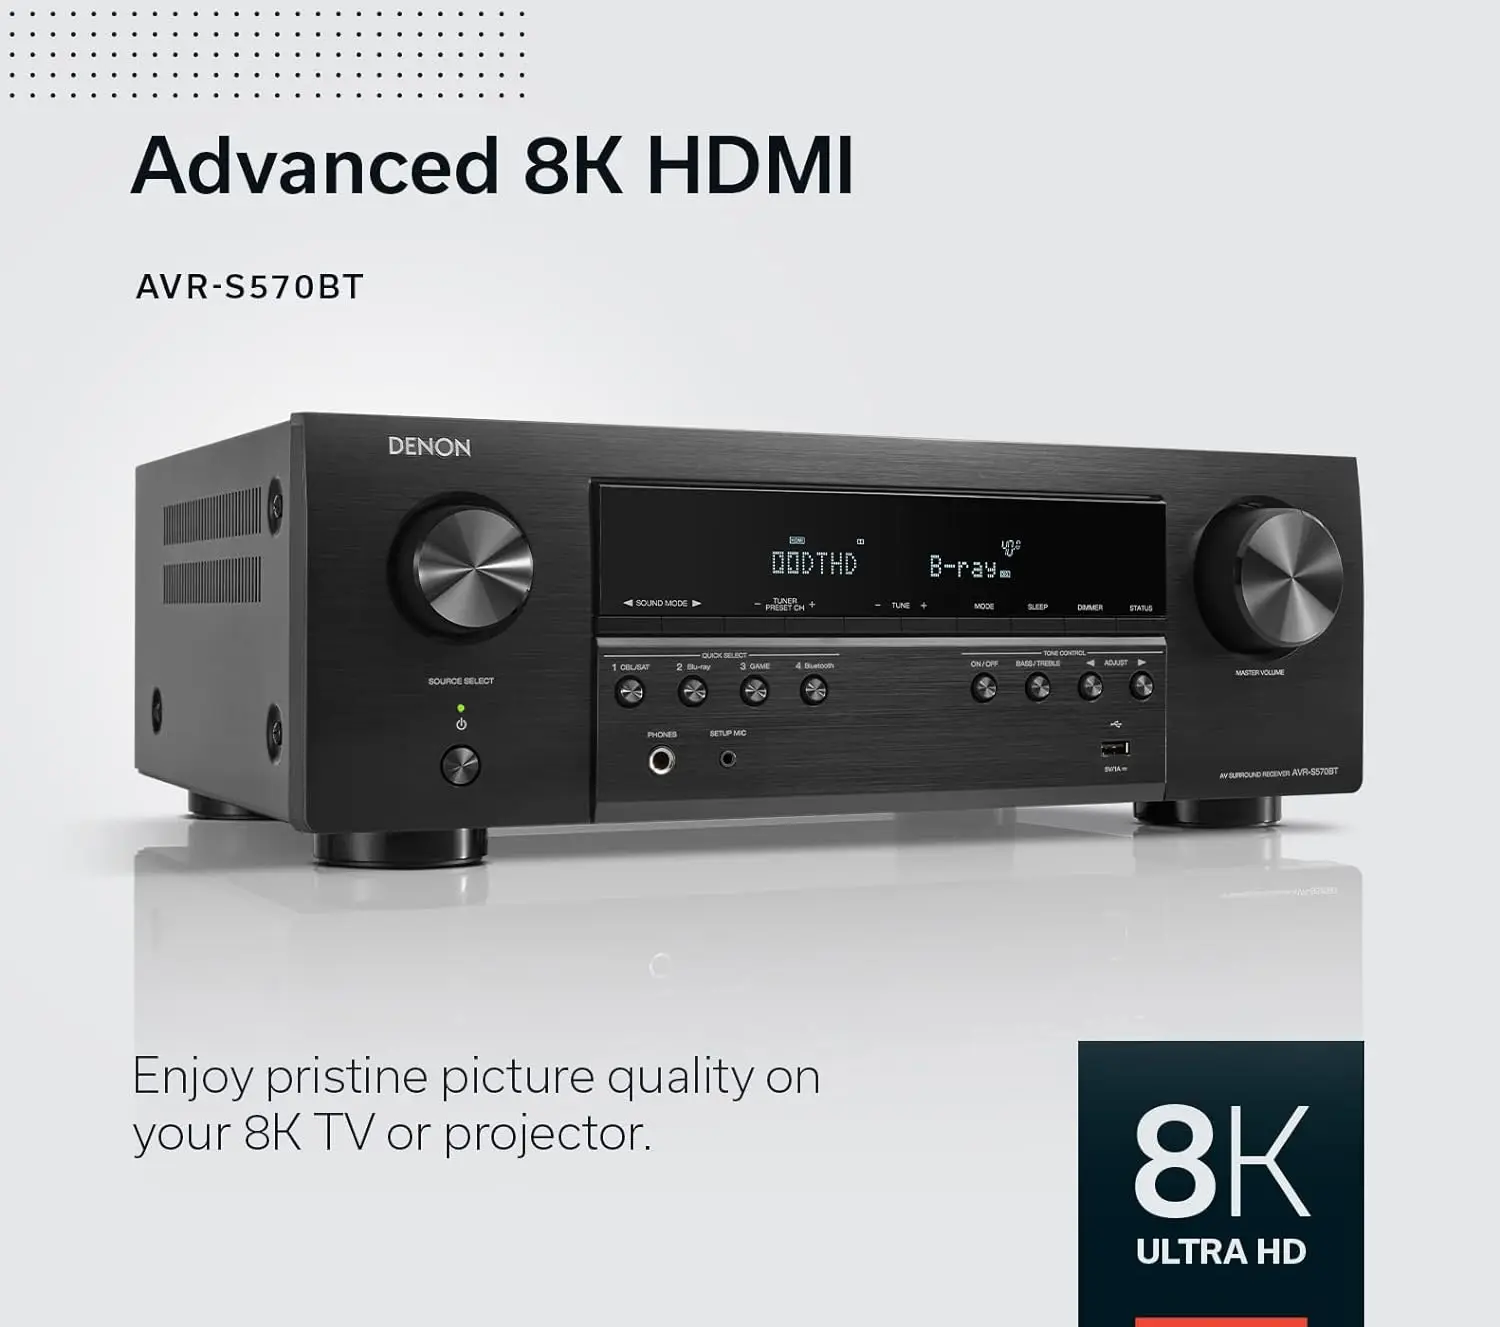 

100% Denon AVR-S570BT 5.2 Channel AV Receiver - 8K Ultra HD Audio & Video, Enhanced Gaming Experience BUY 2 GET 1 FREE